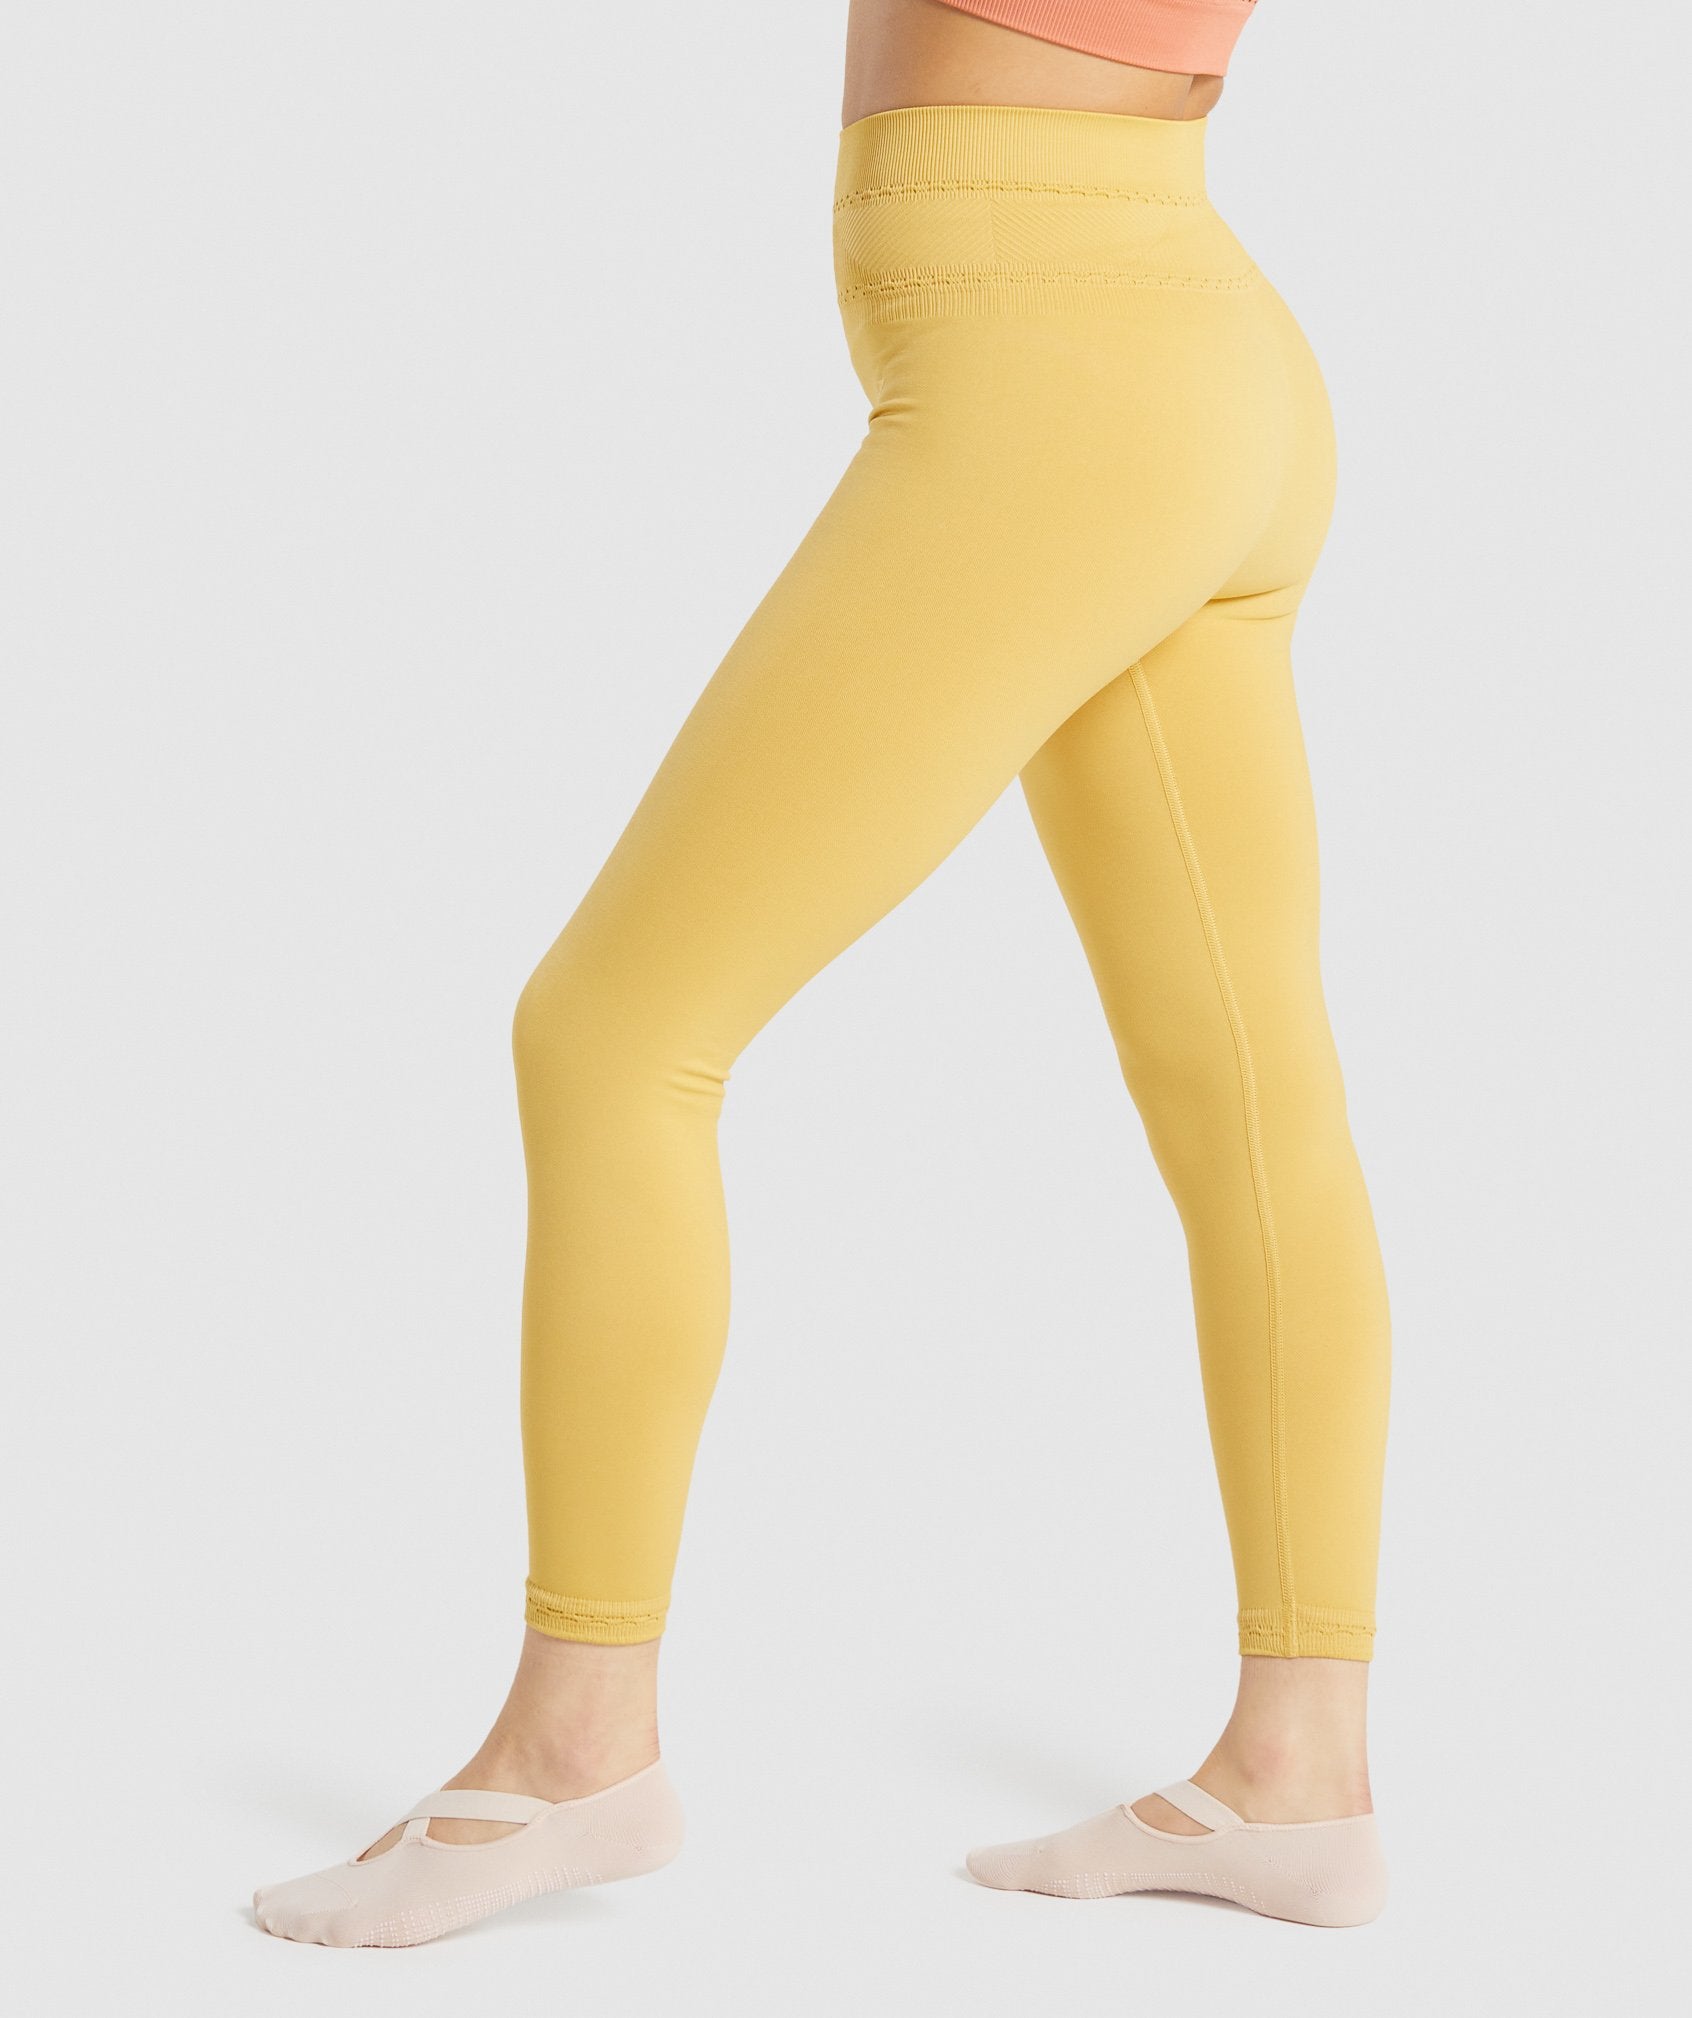 Gymshark - Yellow Gym Shark Set on Designer Wardrobe